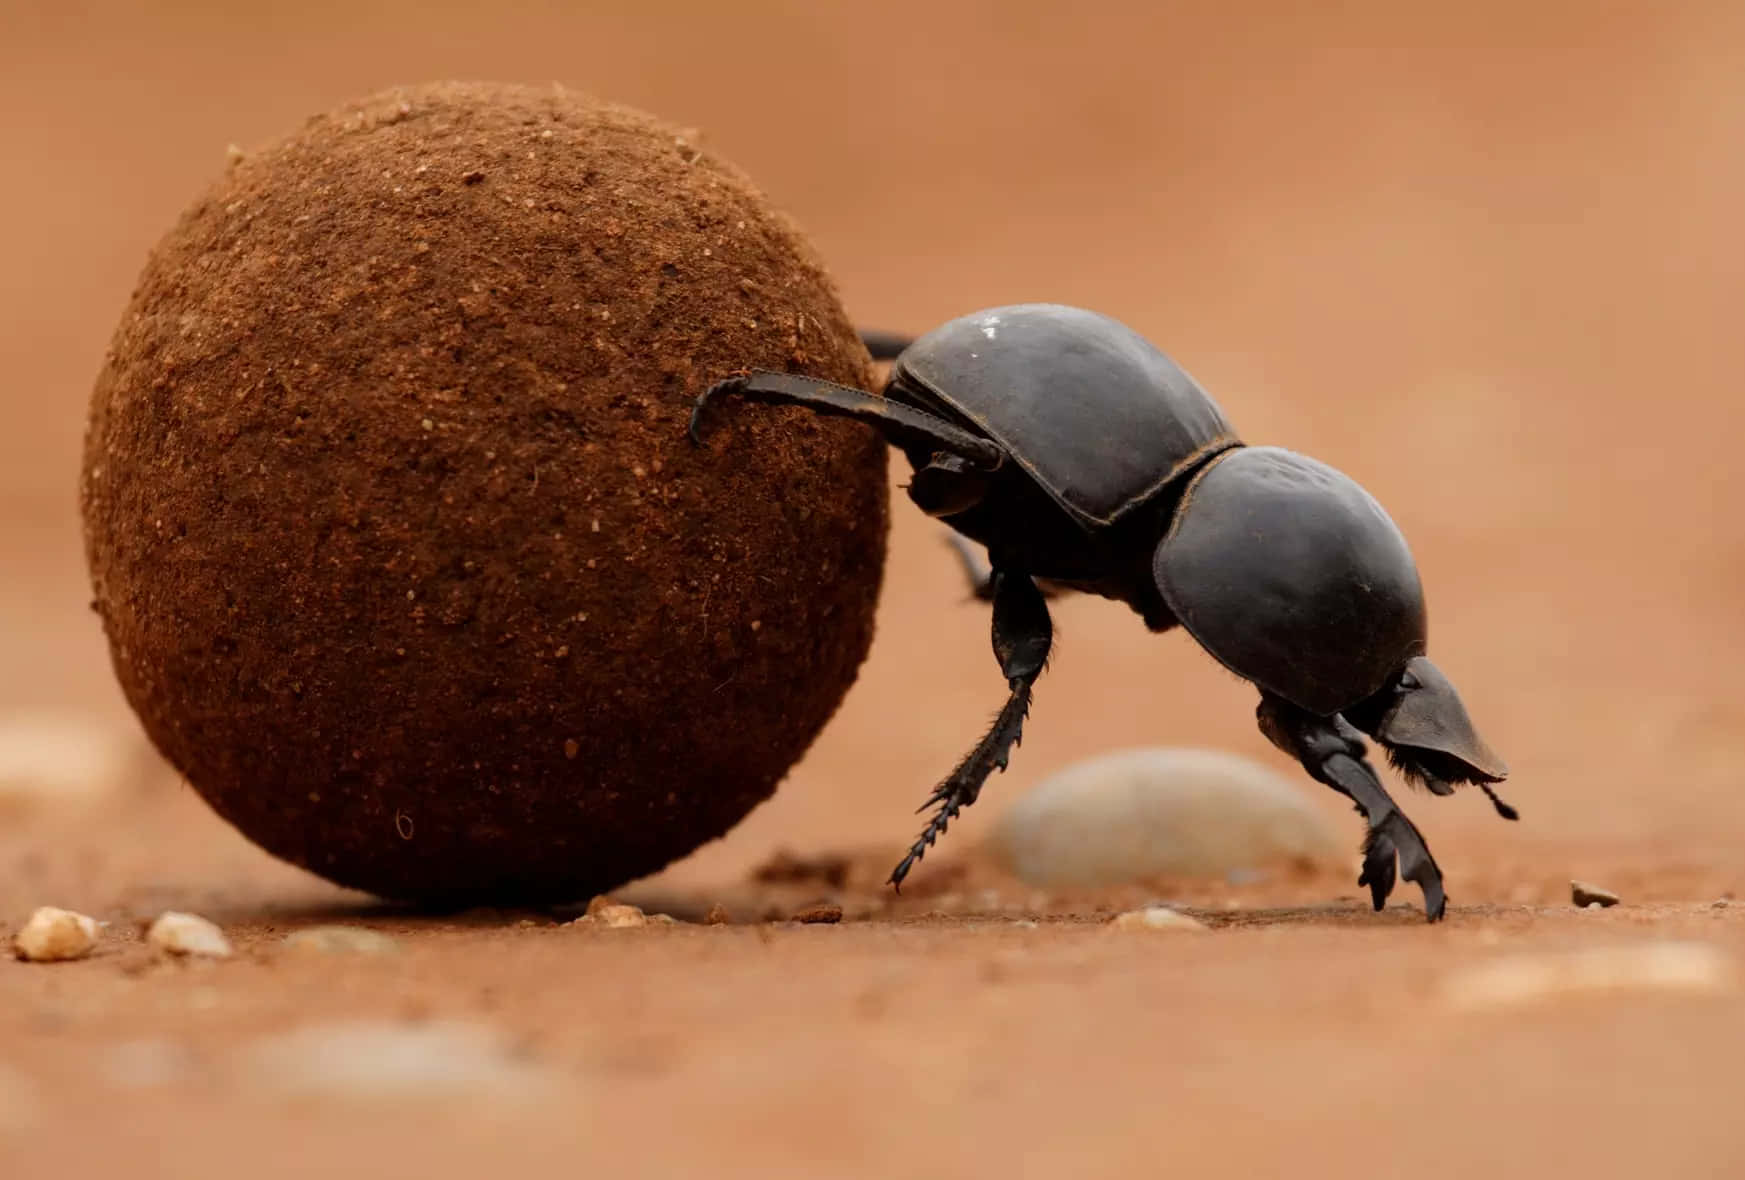 Dung Beetle Hardat Work.jpg Wallpaper